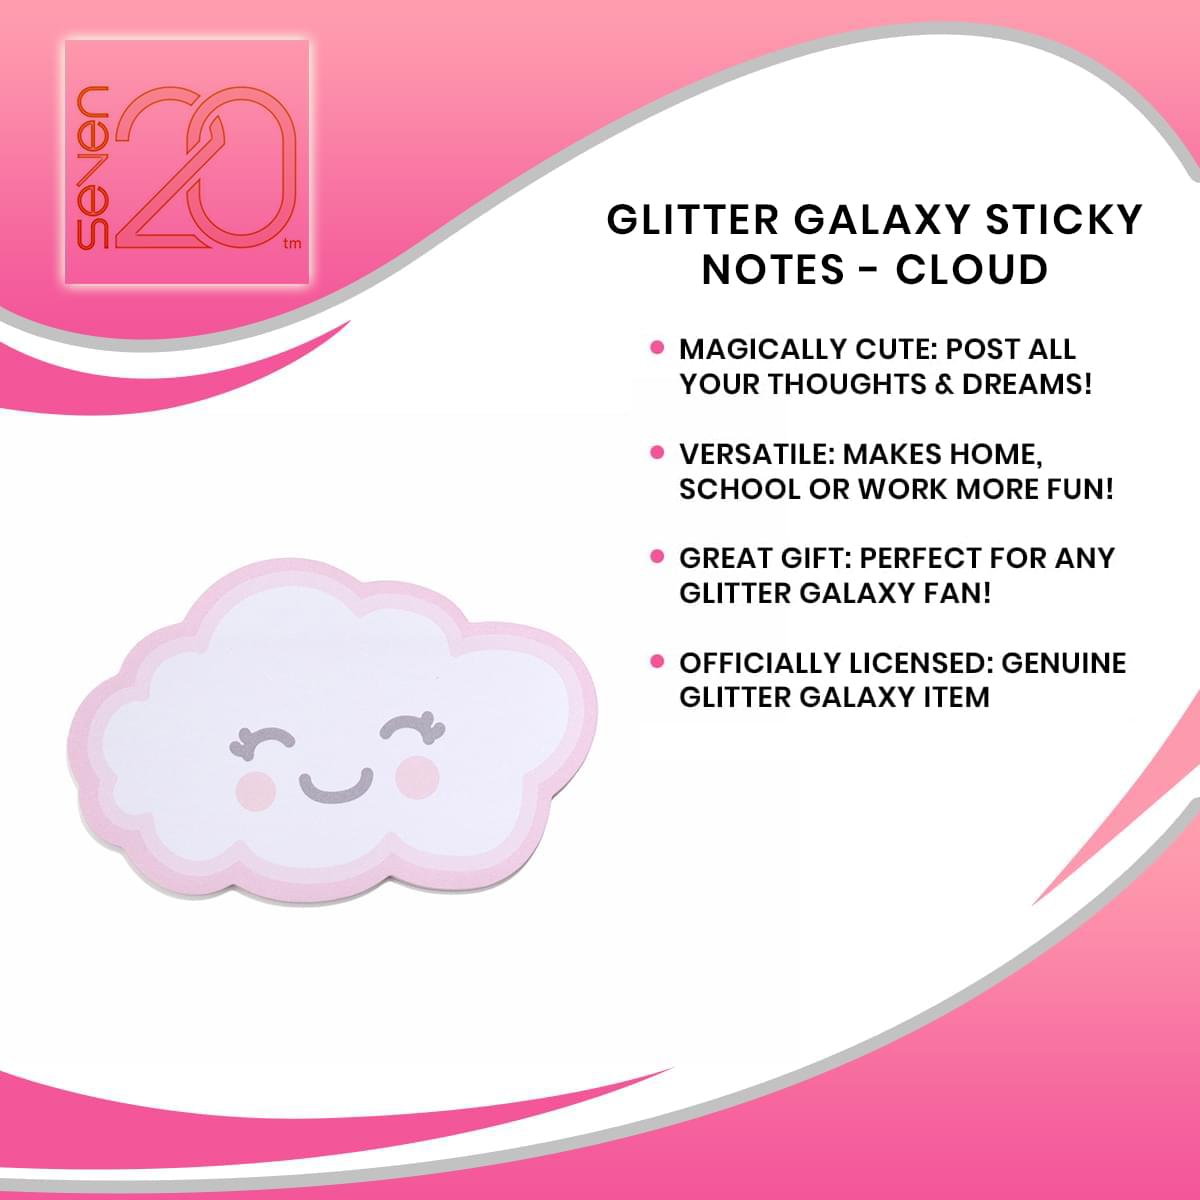 Glitter Galaxy Sticky Notes - Cloud